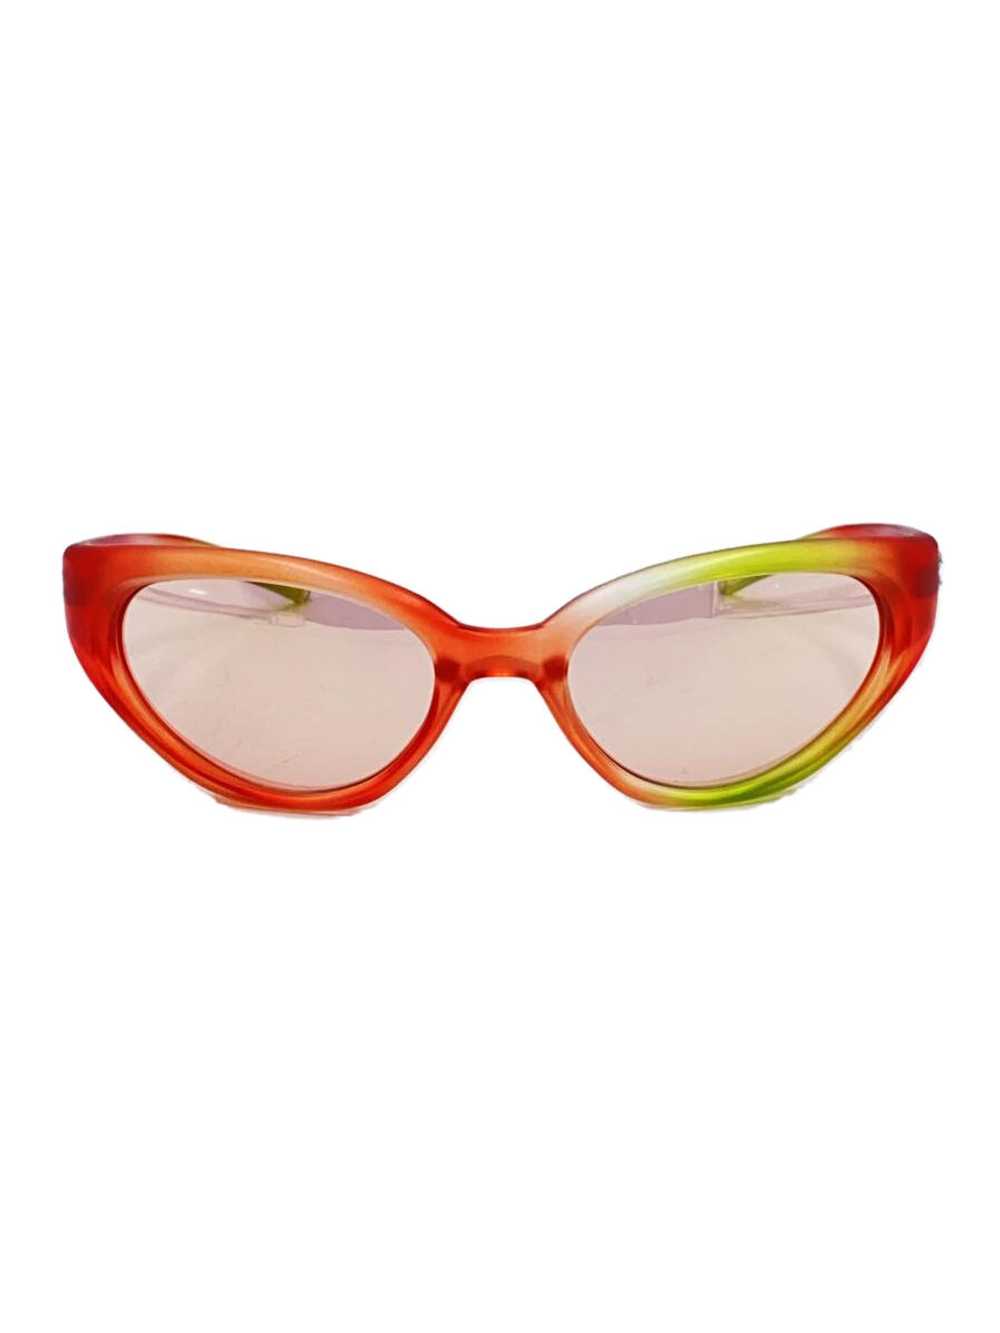 Used Gentle Monster Sunglasses Plastic Red Pnk La… - image 1